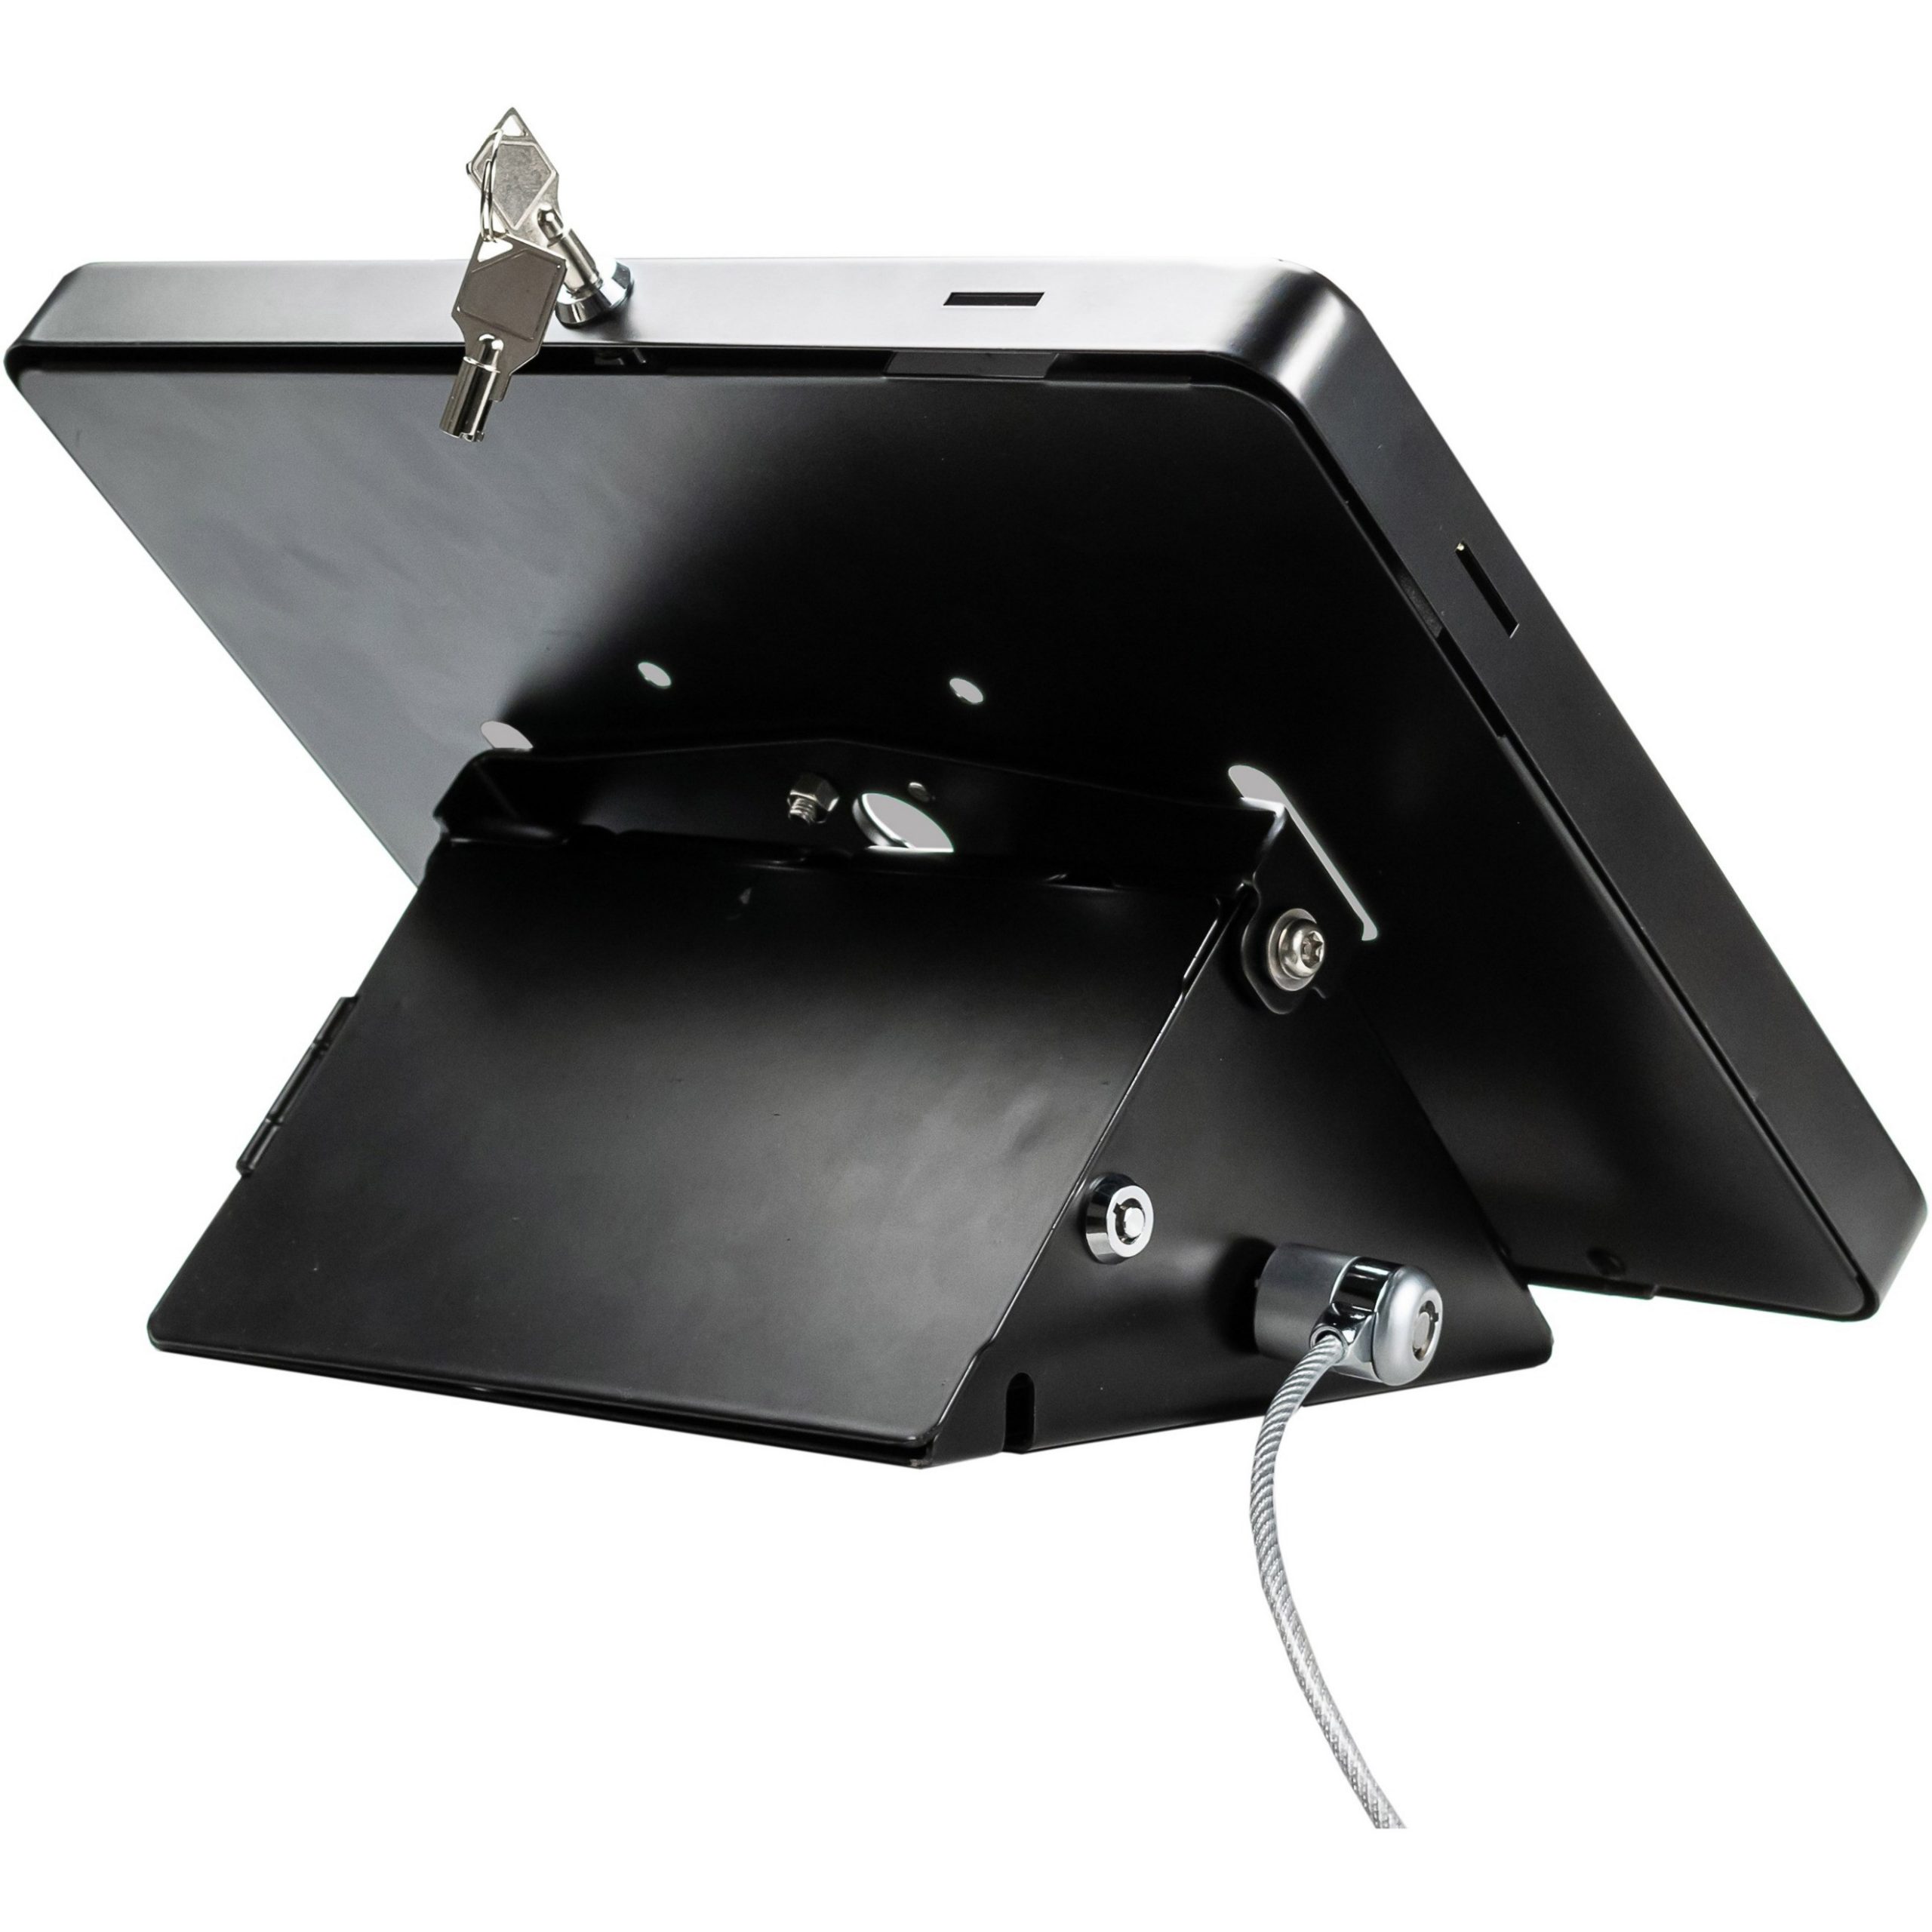 Cta Digital Accessories Premium Angle-Flip Security POS Kiosk with Storage CompartmentKey Lock PAD-PARAPK